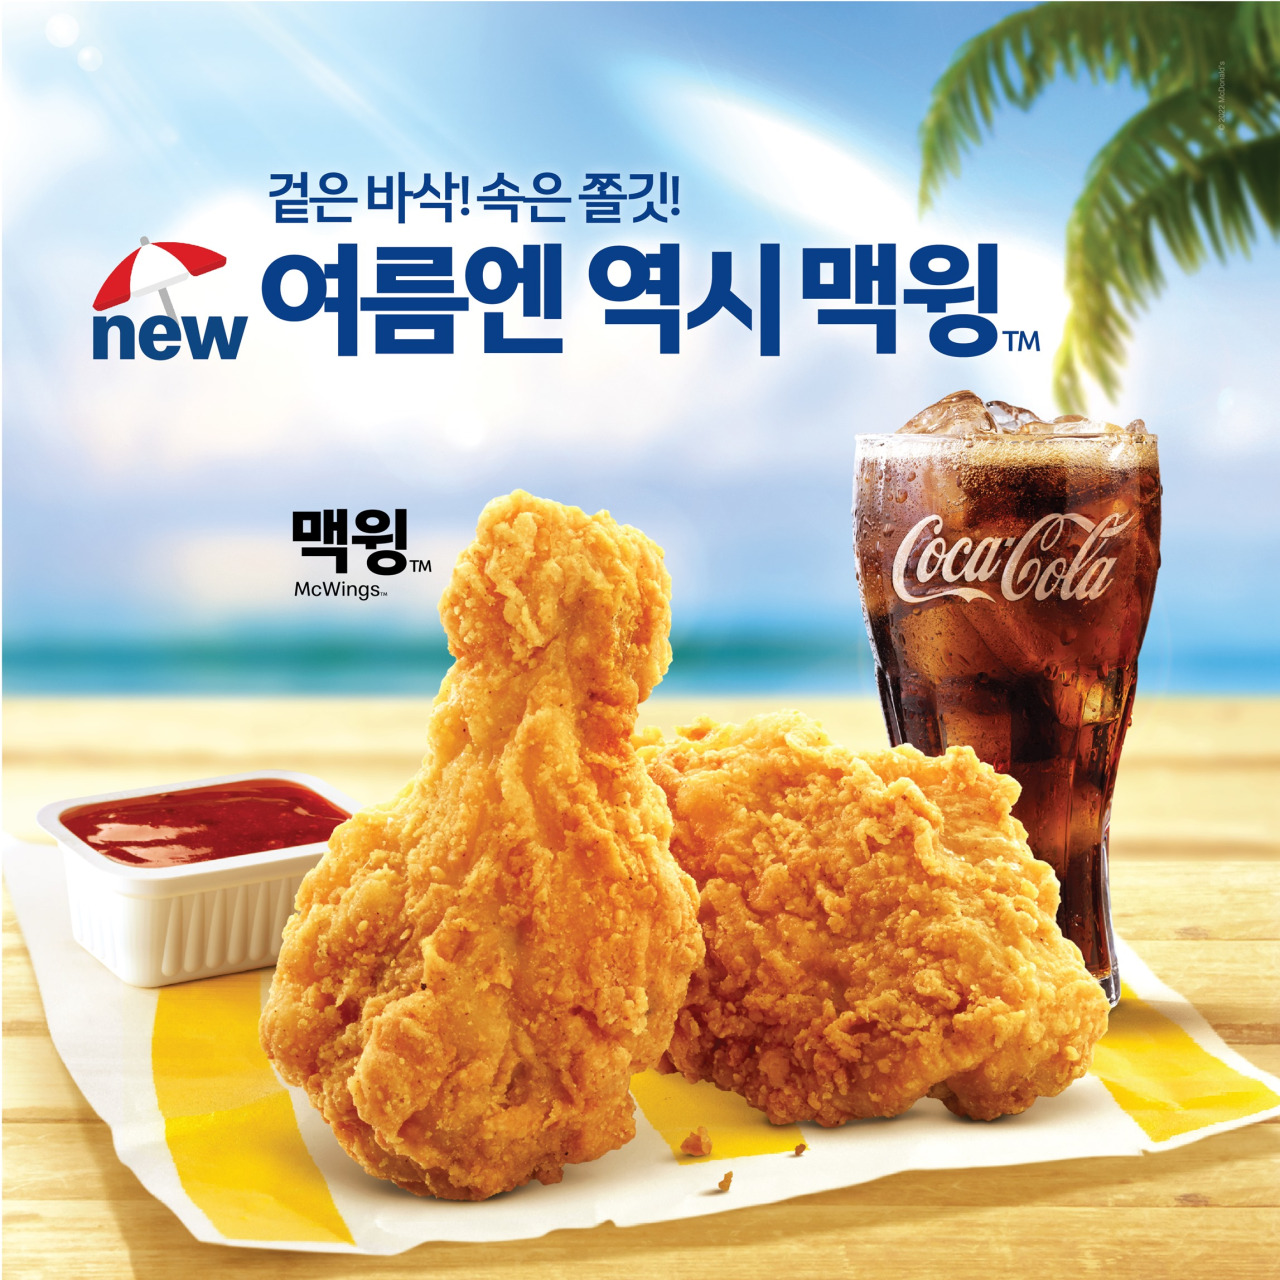 A promotional image of the seasonal limited edition side menu McWings (McDonald’s Korea)